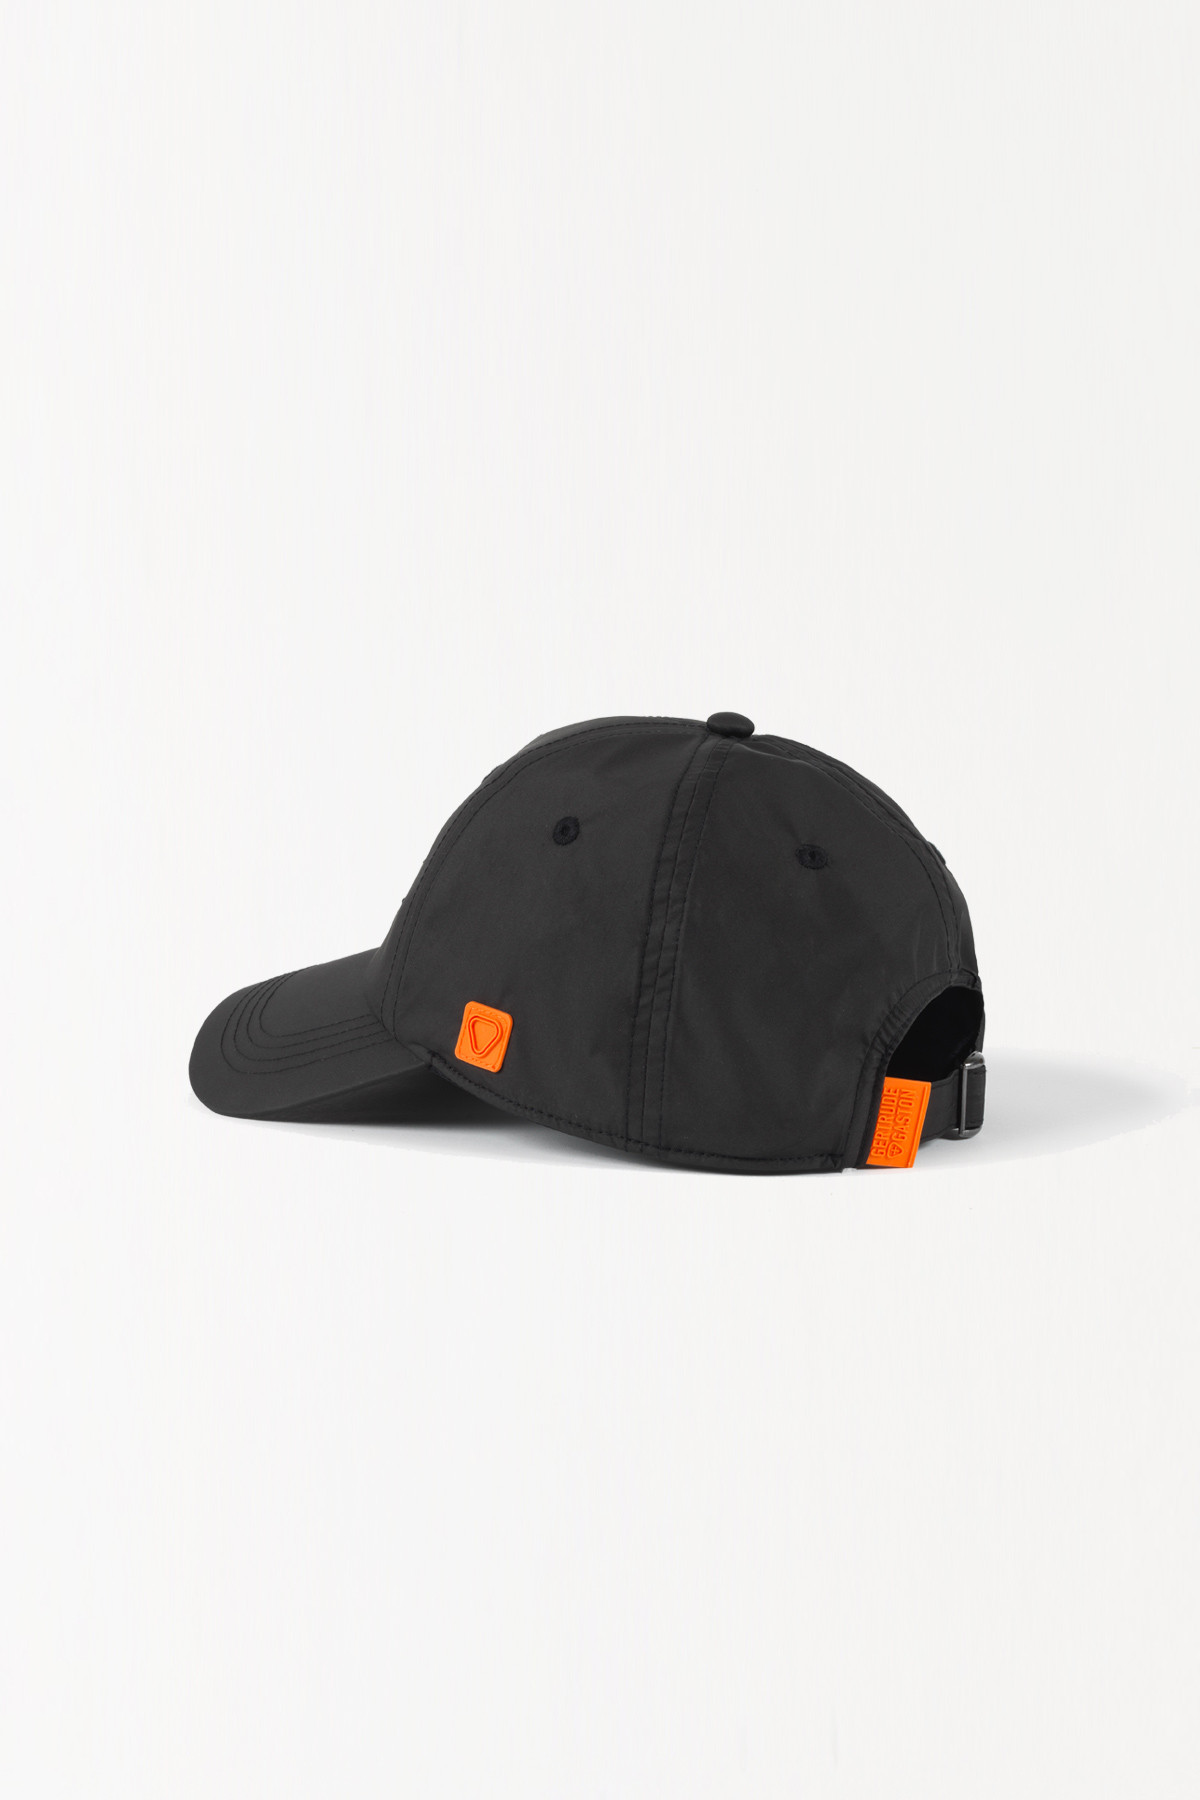 Coco baseball cap Black